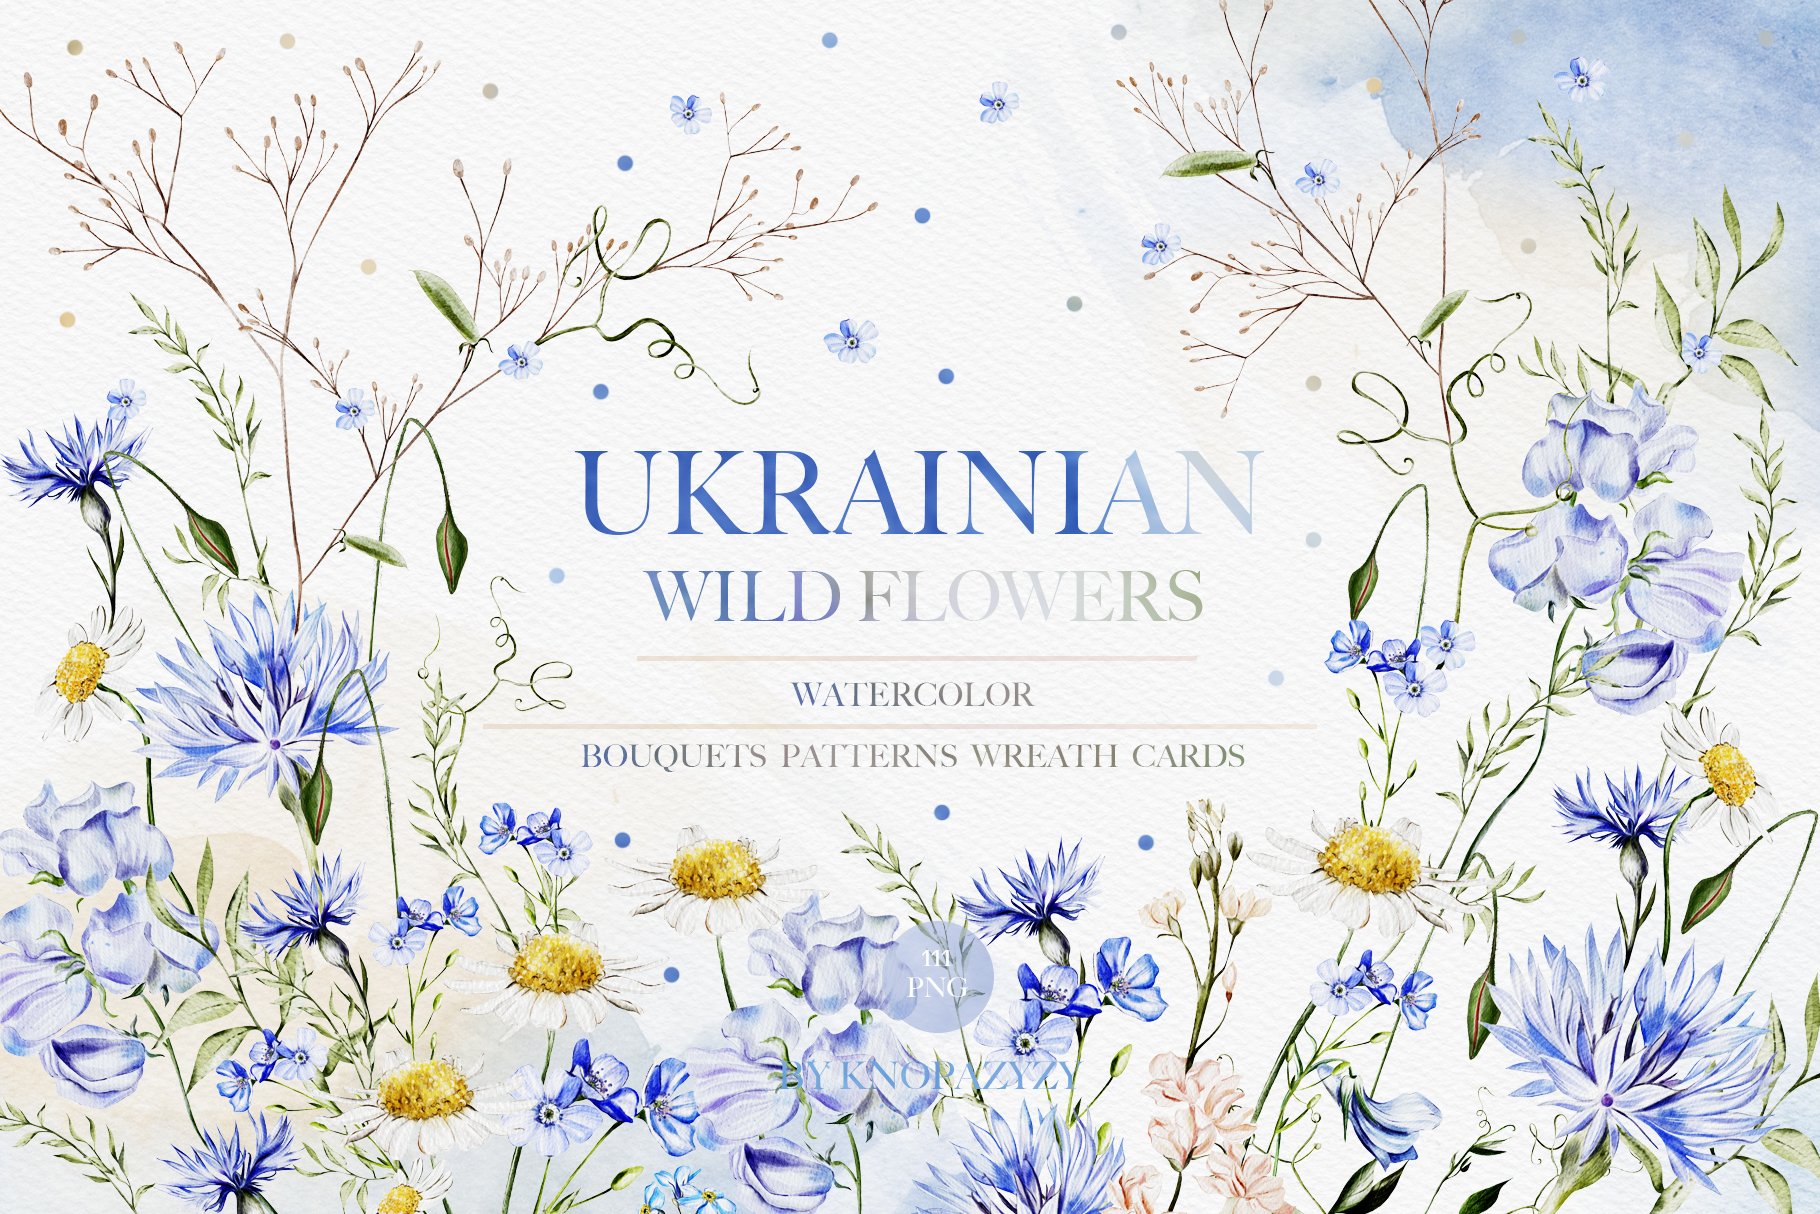 UKRAINIAN WILD FLOWERS cover image.